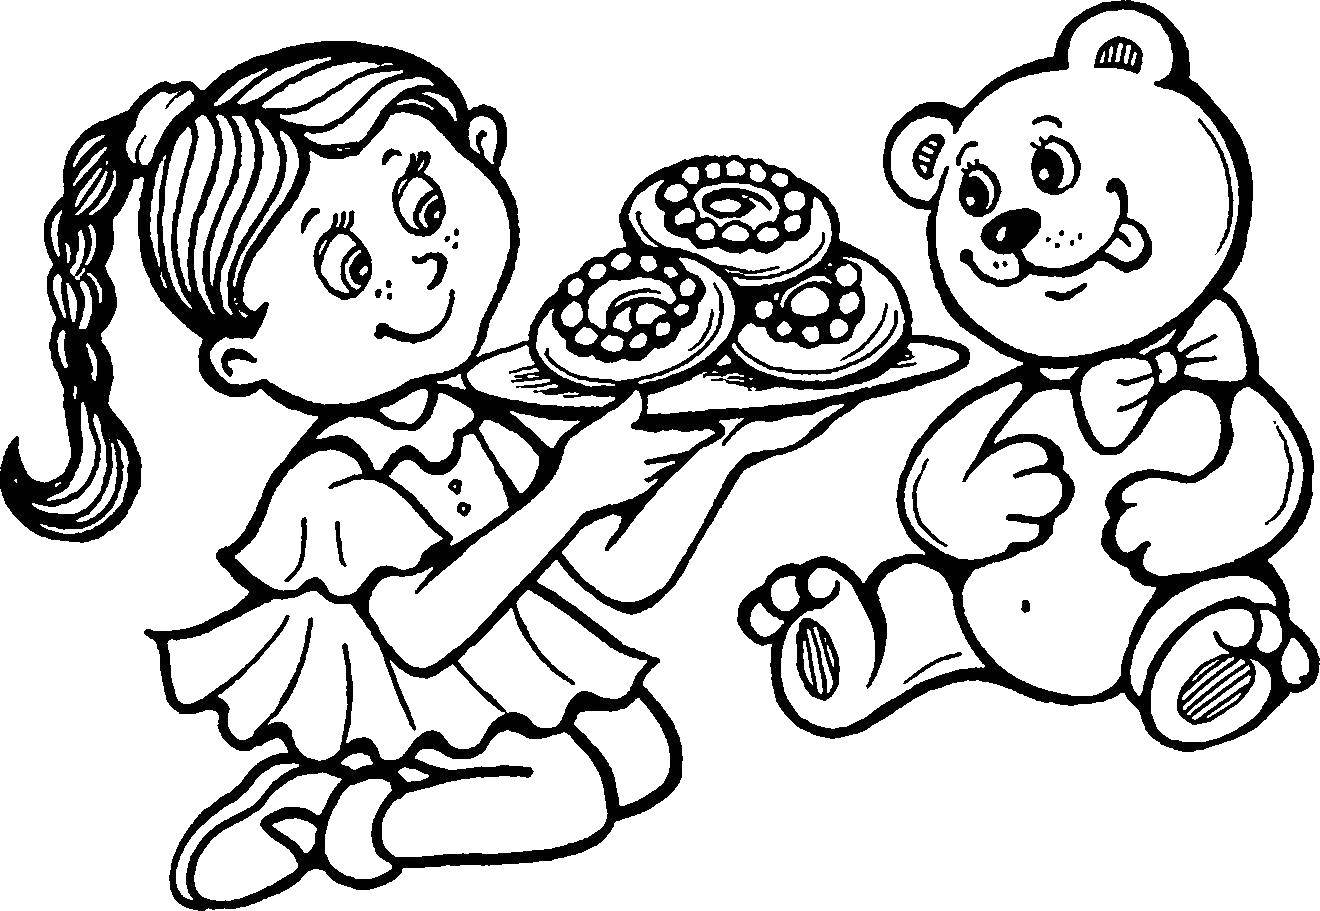 Название: Раскраска Девочка приготовила еду мишке. Категория: игрушки. Теги: Игрушка, медведь.